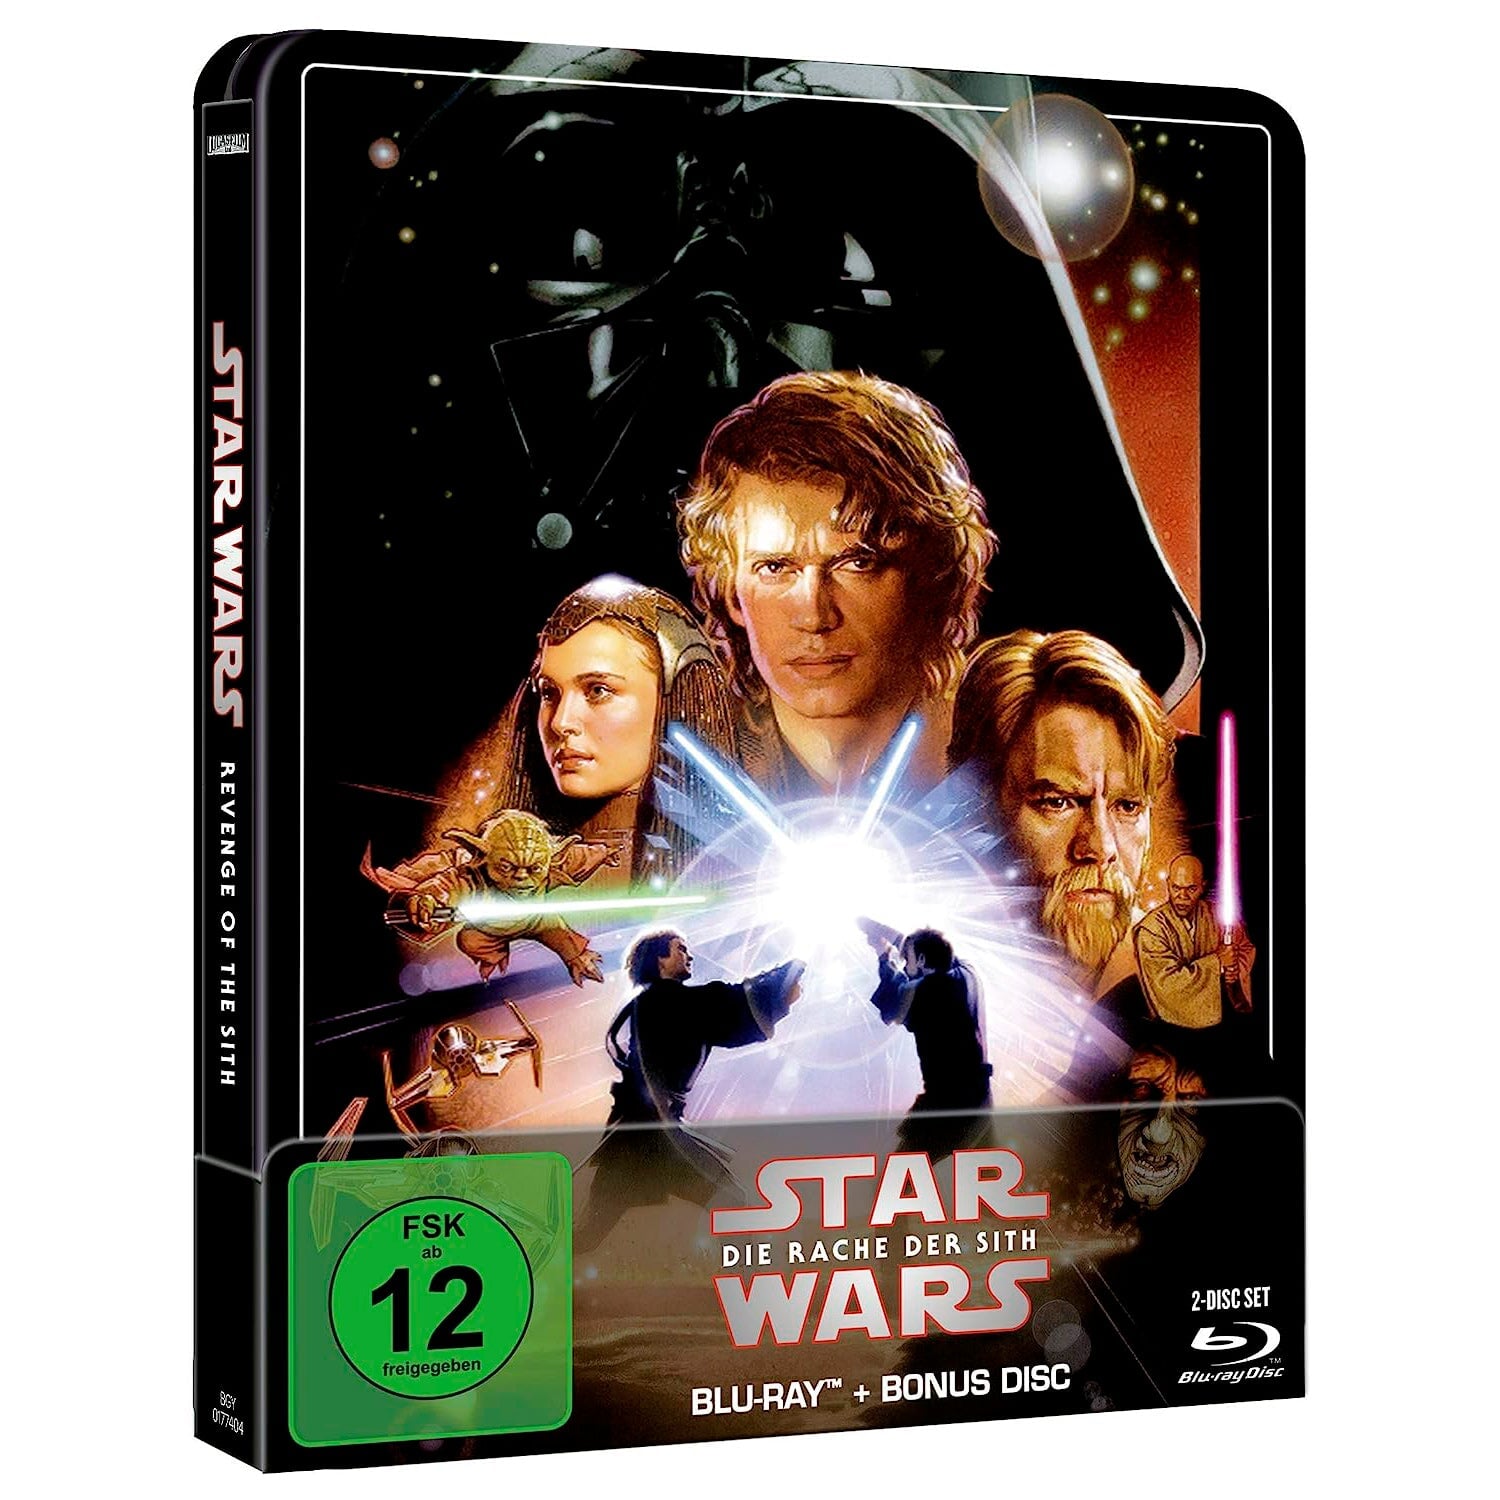 Star Wars: Episode III – Revenge of the Sith (Blu-ray + Bonus Disc)  Steelbook – Bluraymania